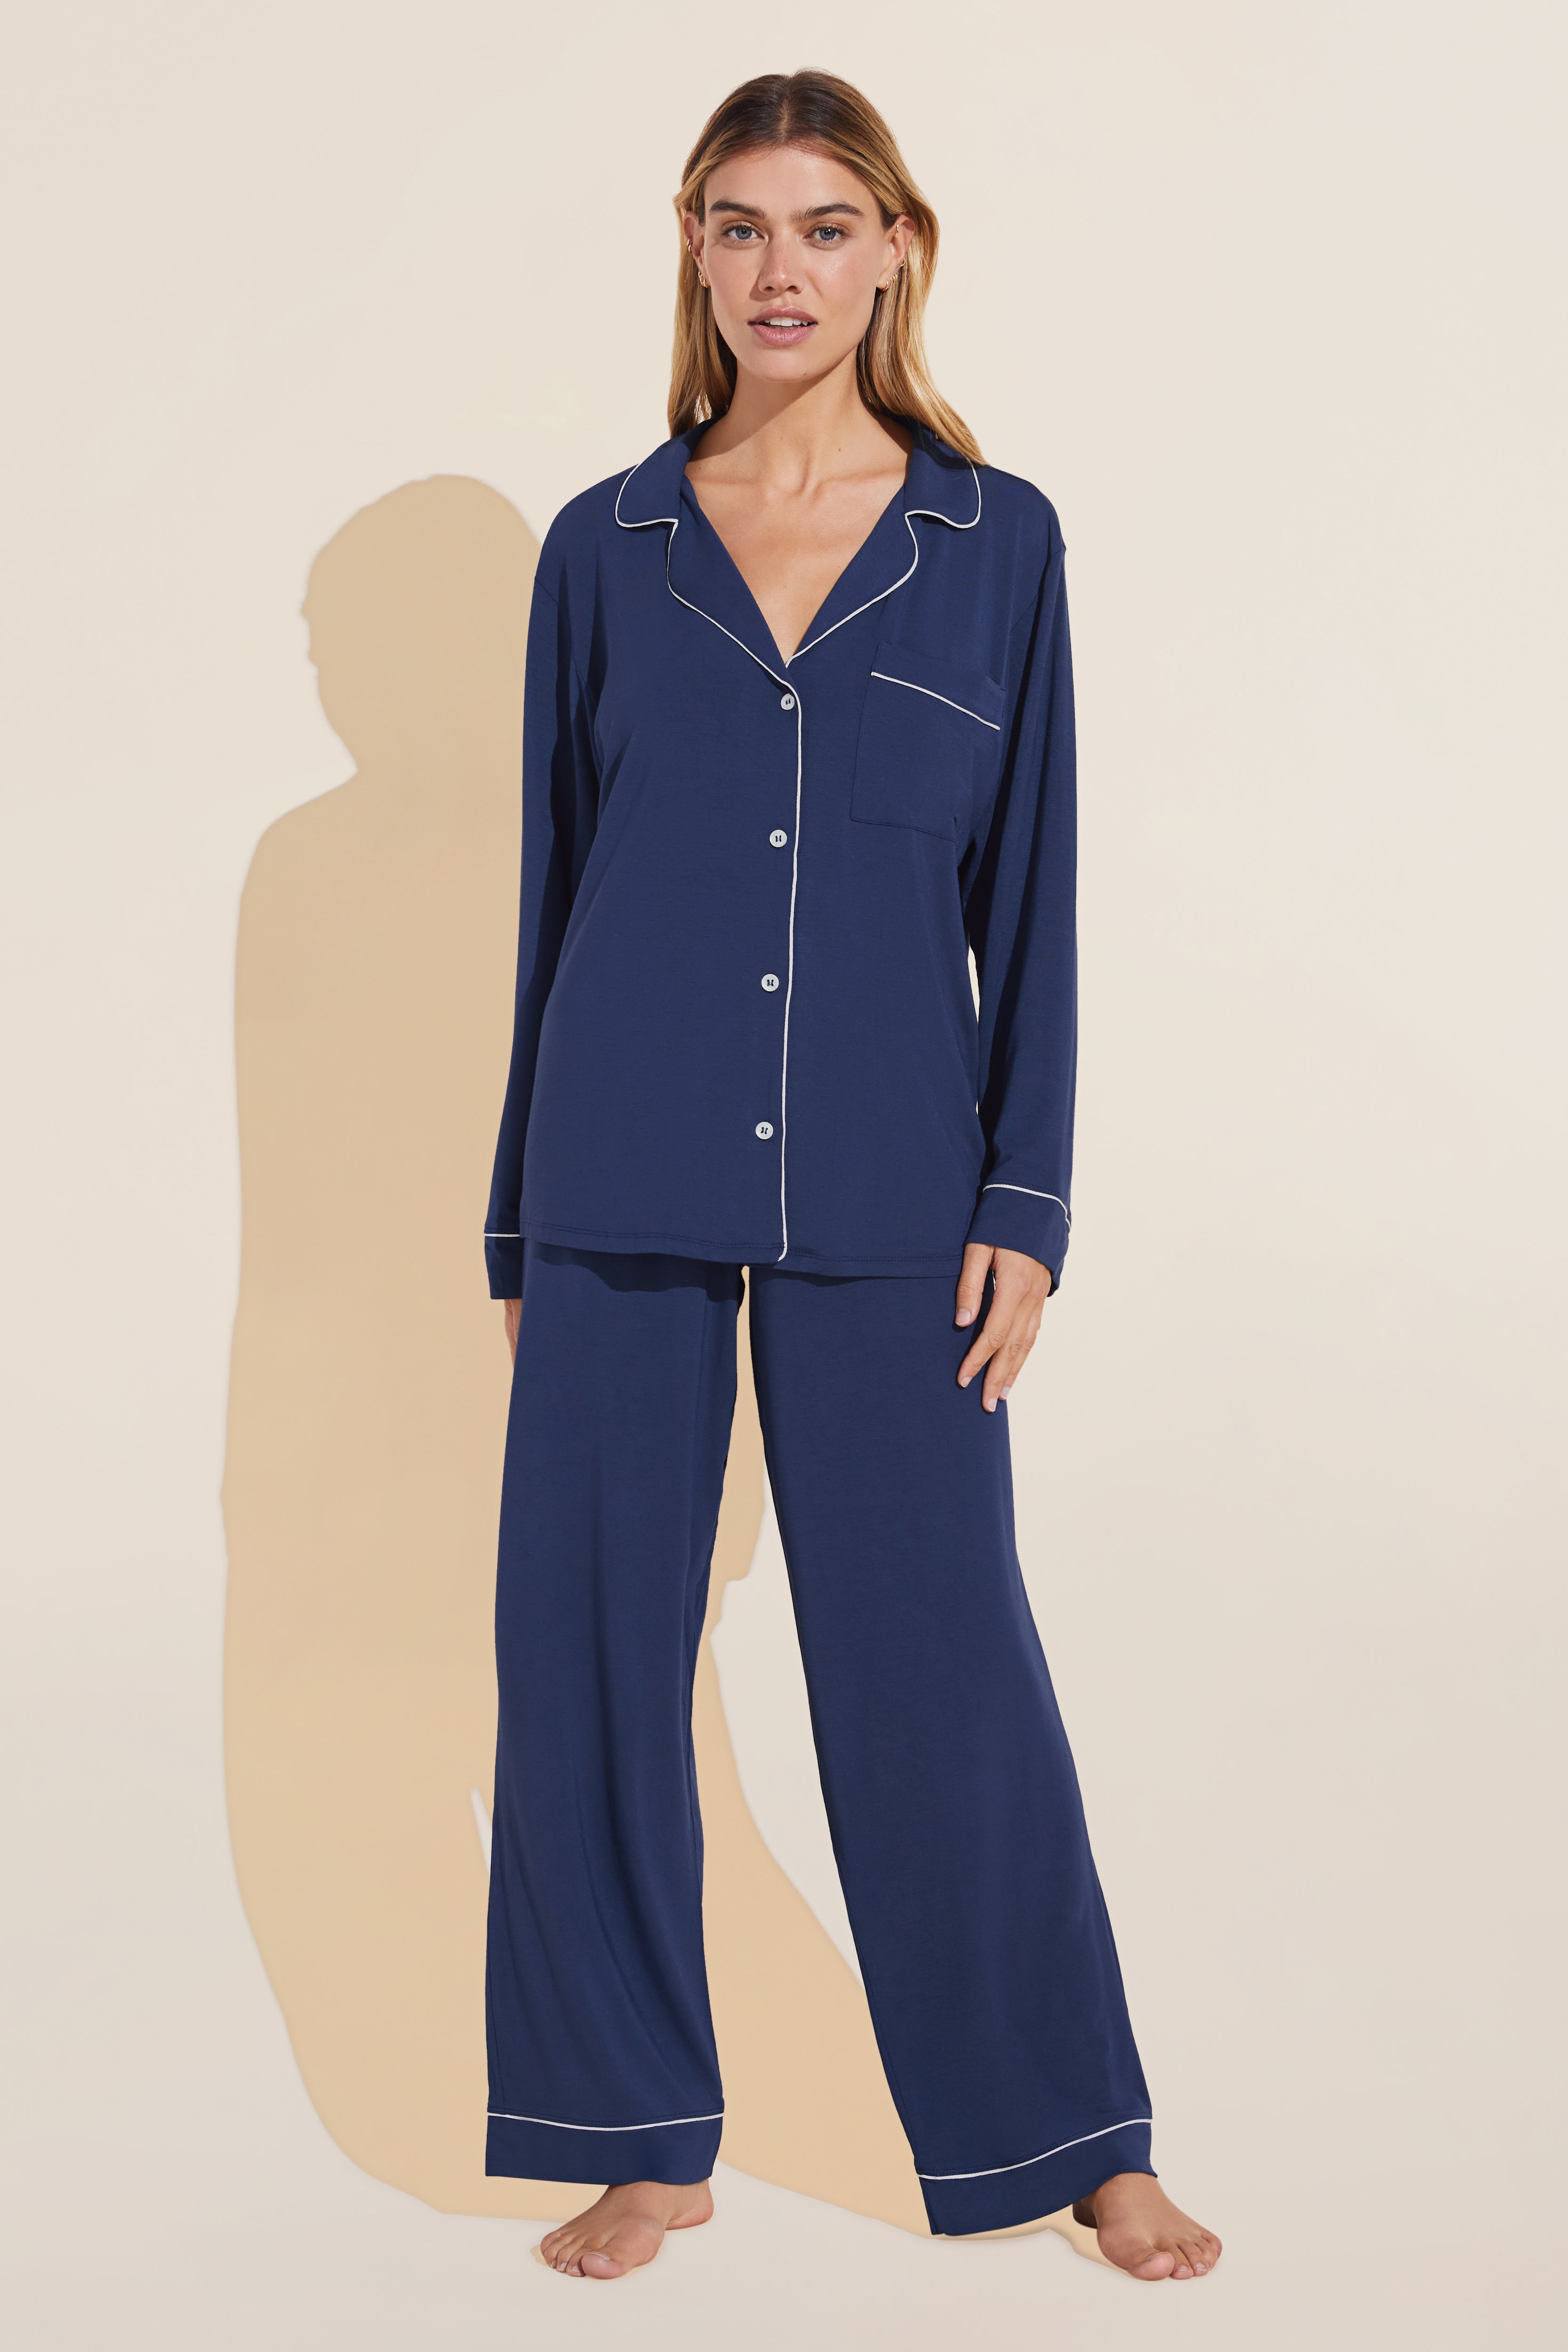 Kids Long Sleeve Modal Sleepwear Pajamas 2pcs Set Modal Navy JM